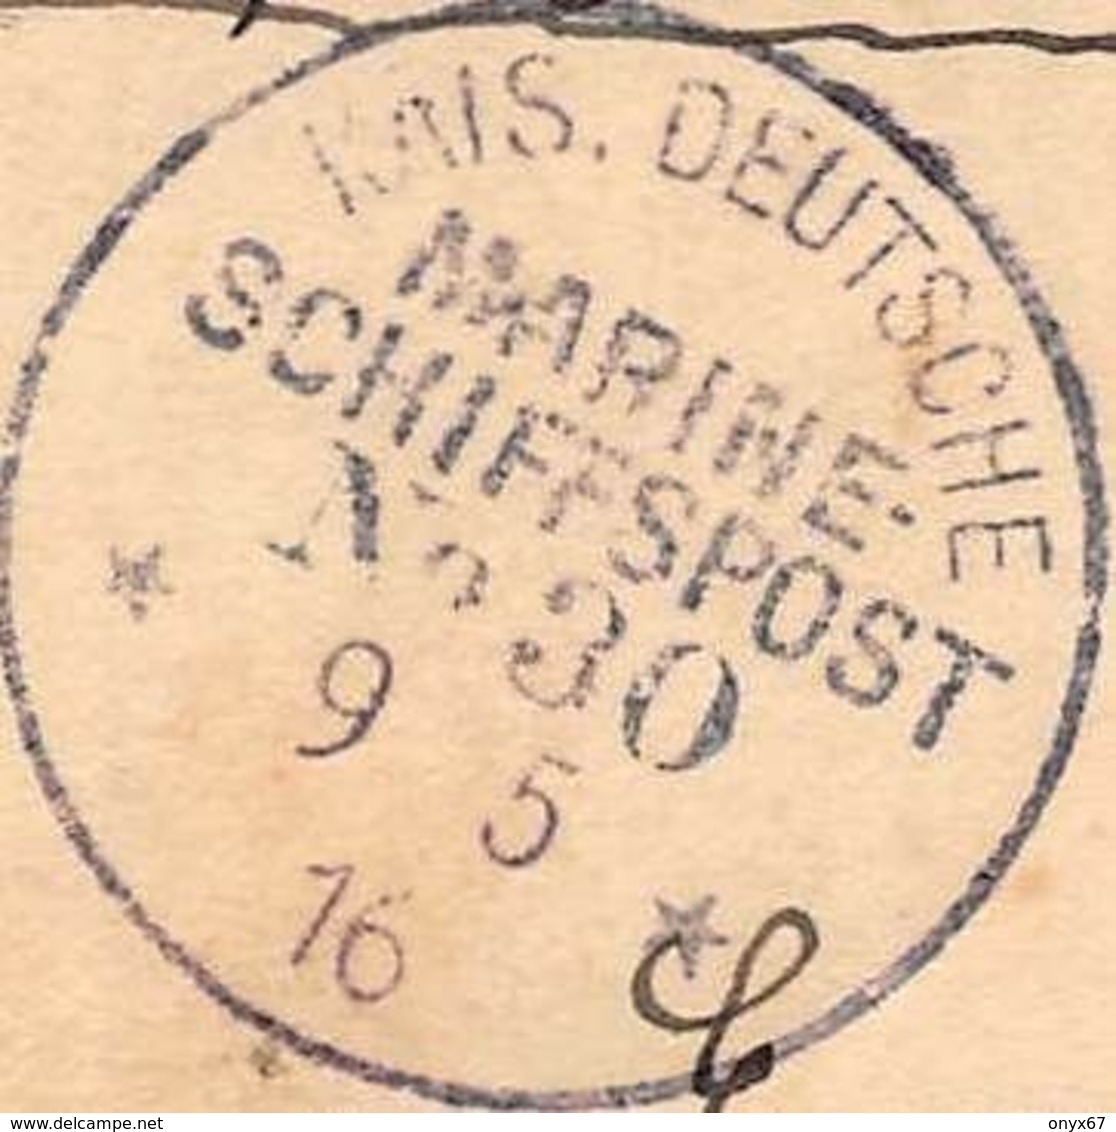 Carte Postale Photo Militaire Allemand BATEAU GUERRE-DRAPEAU-SCHIFFE-S.M.S RHEINLAND-Stempfel-Kaiser Marine-Schiffspost - Guerre